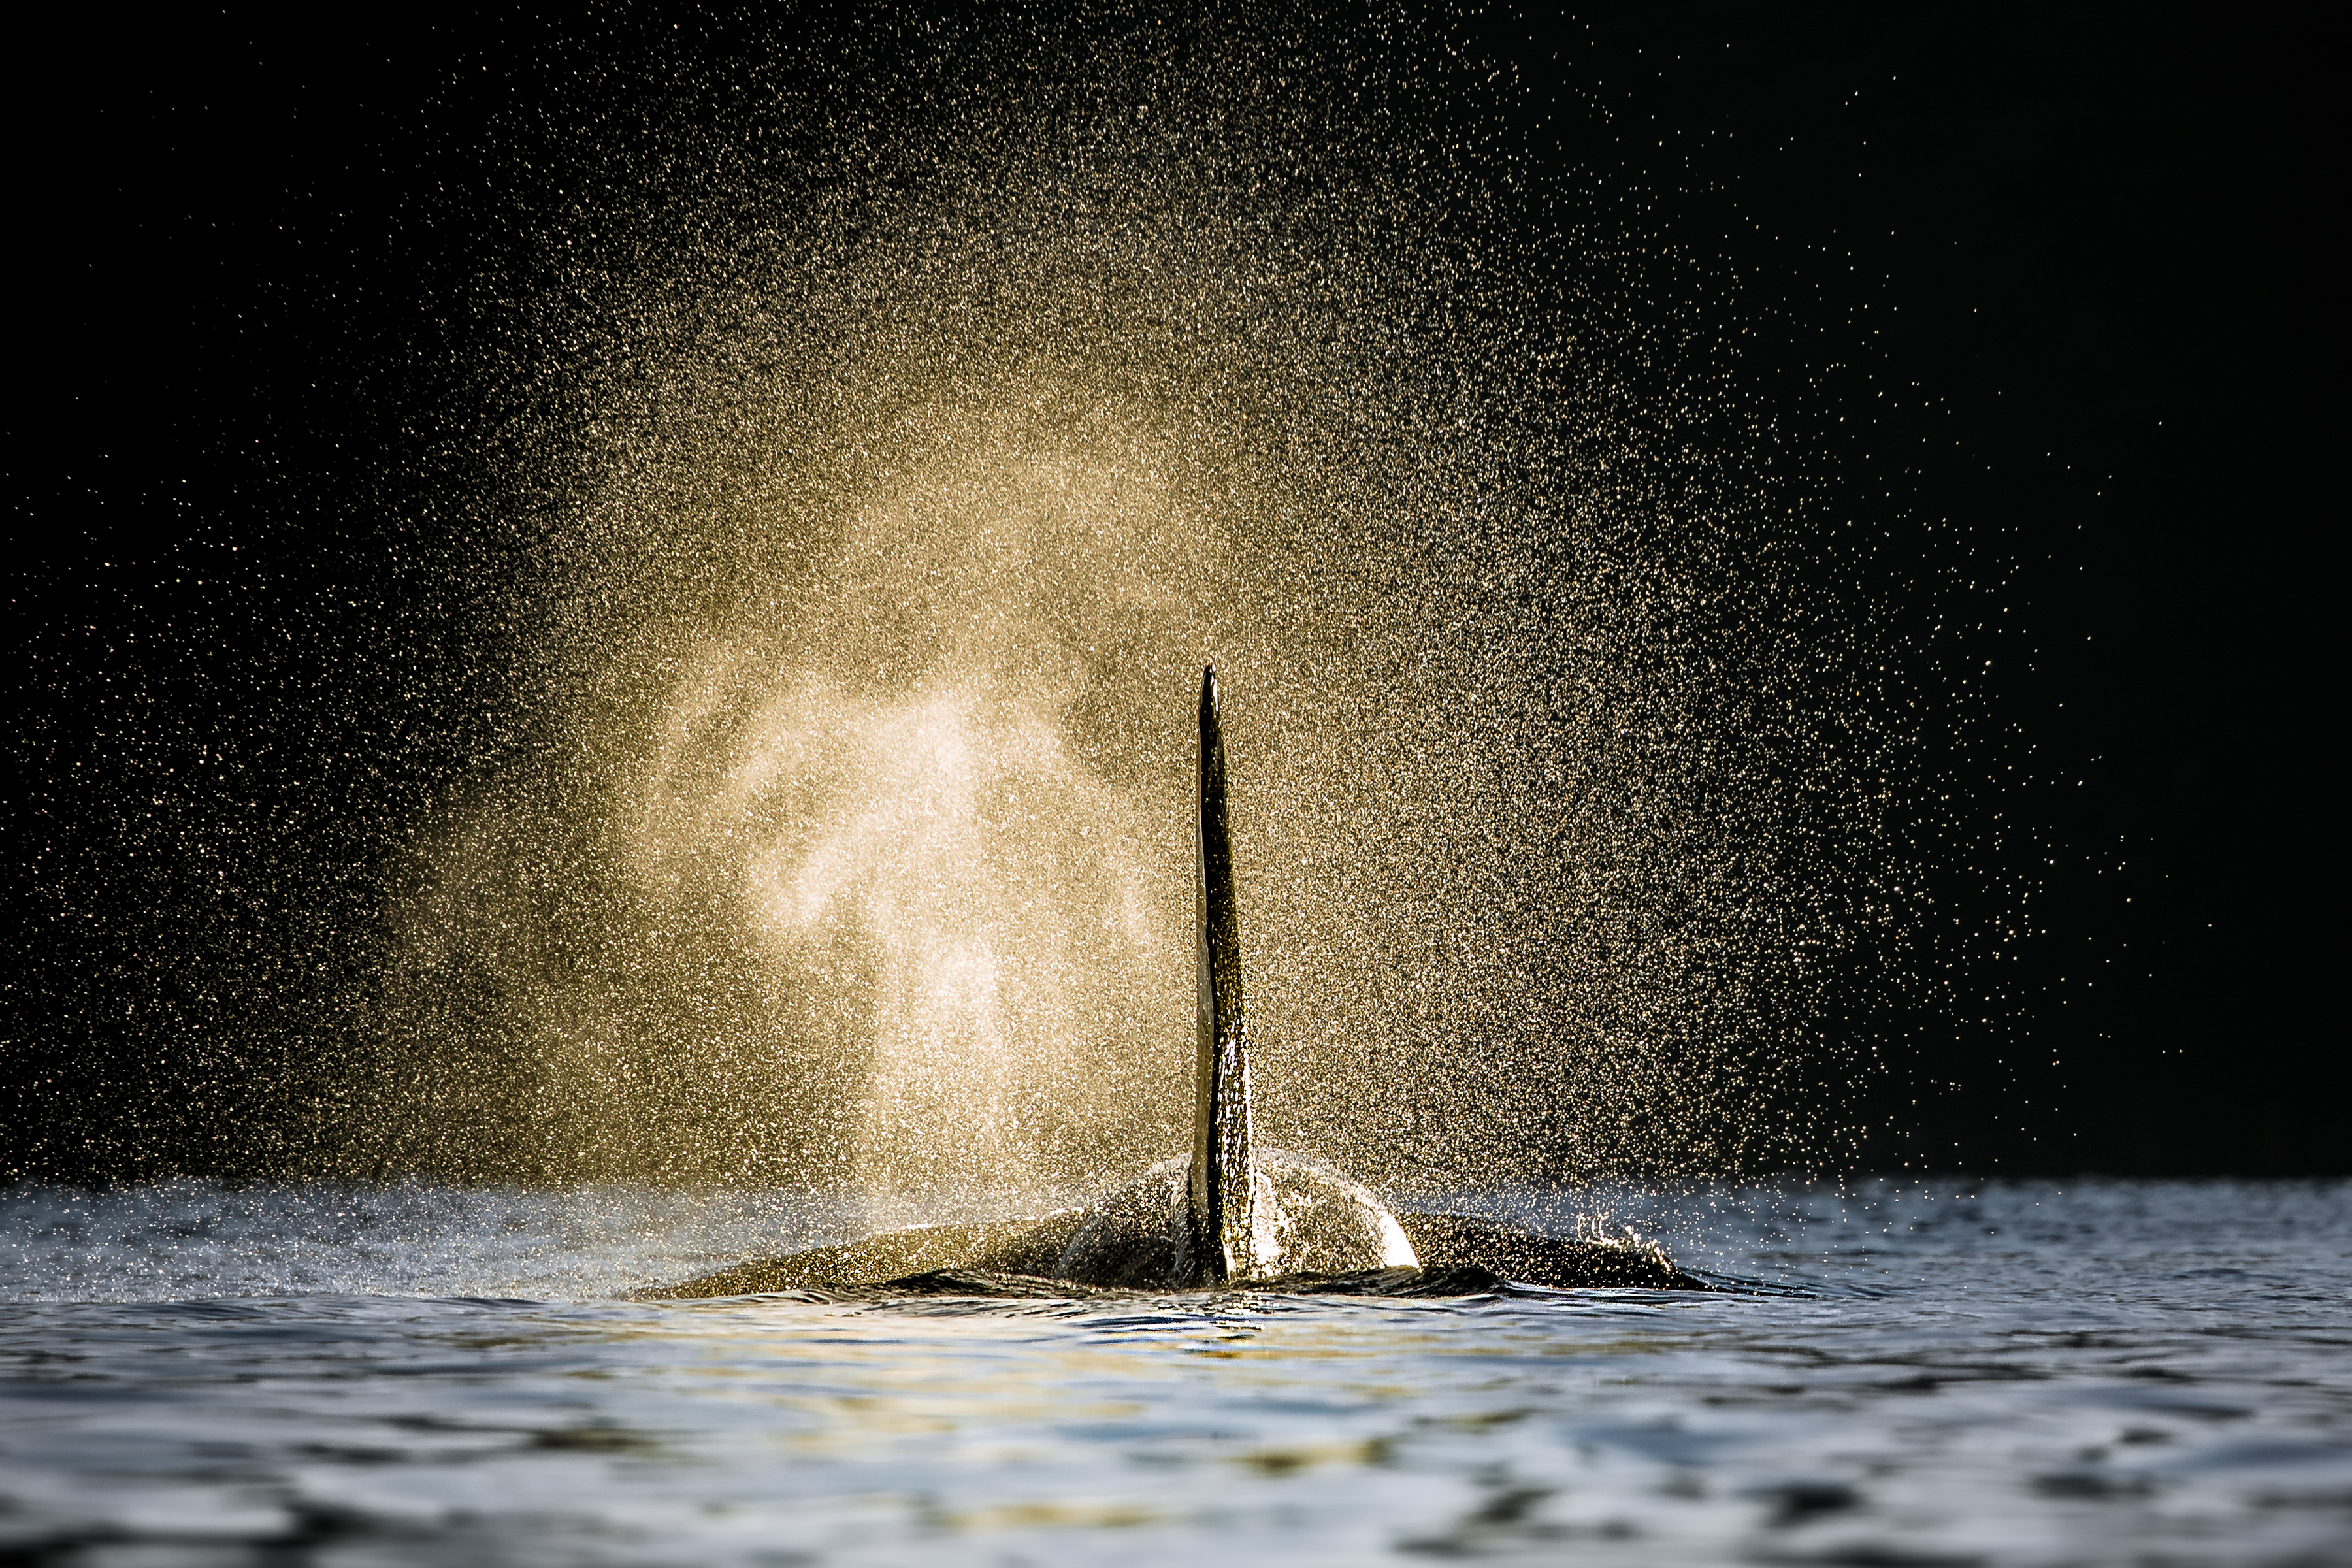 A killer whale. (Photo by Audun Rikardsen, Arctic Coast Photography)